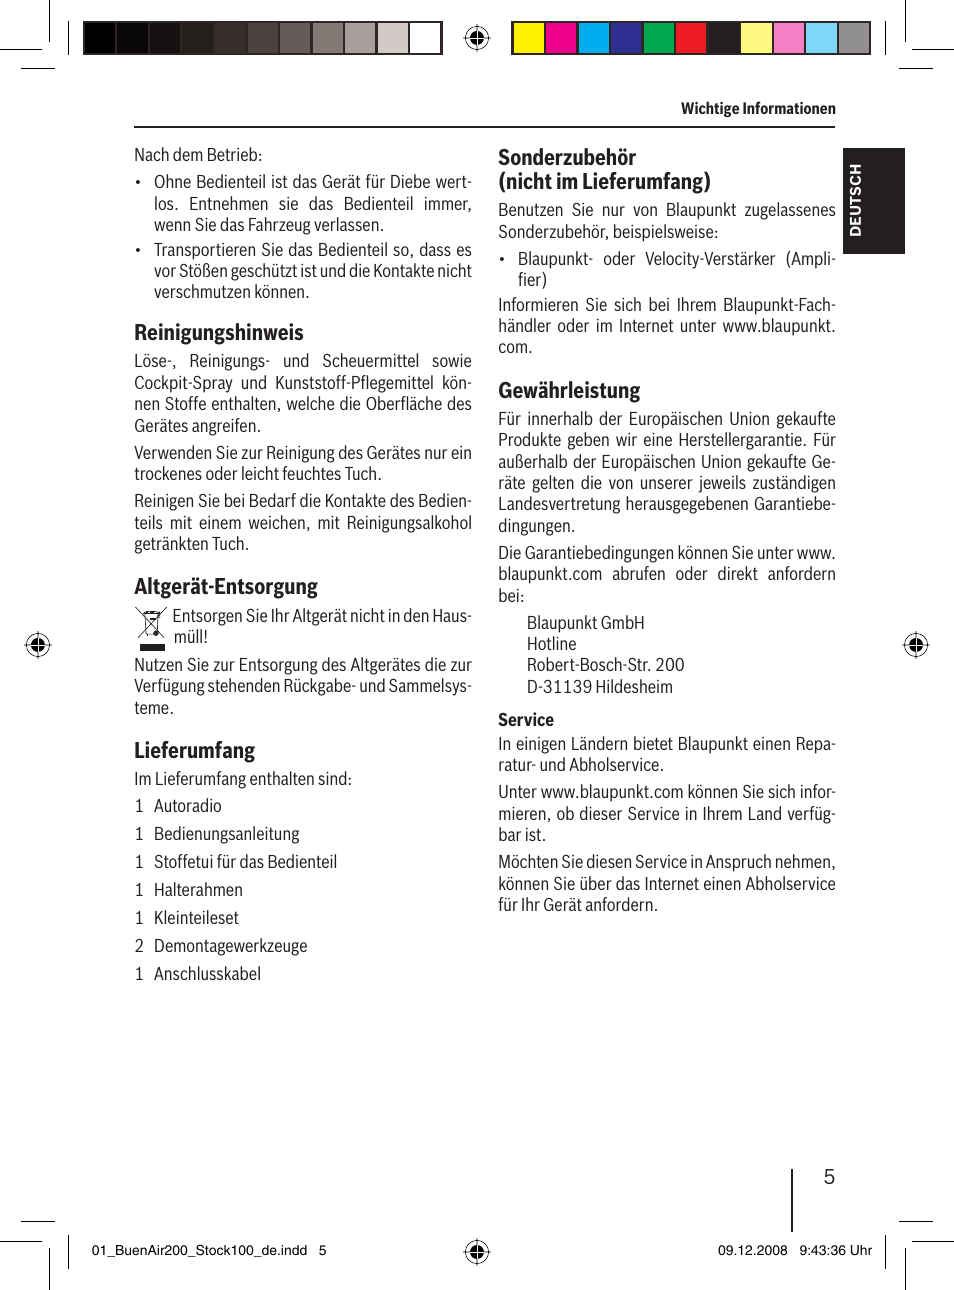 Reinigungshinweis, Altgerät-entsorgung, Lieferumfang | Blaupunkt BUENOS  AIRES 200 7 649 020 110 User Manual | Page 5 / 140